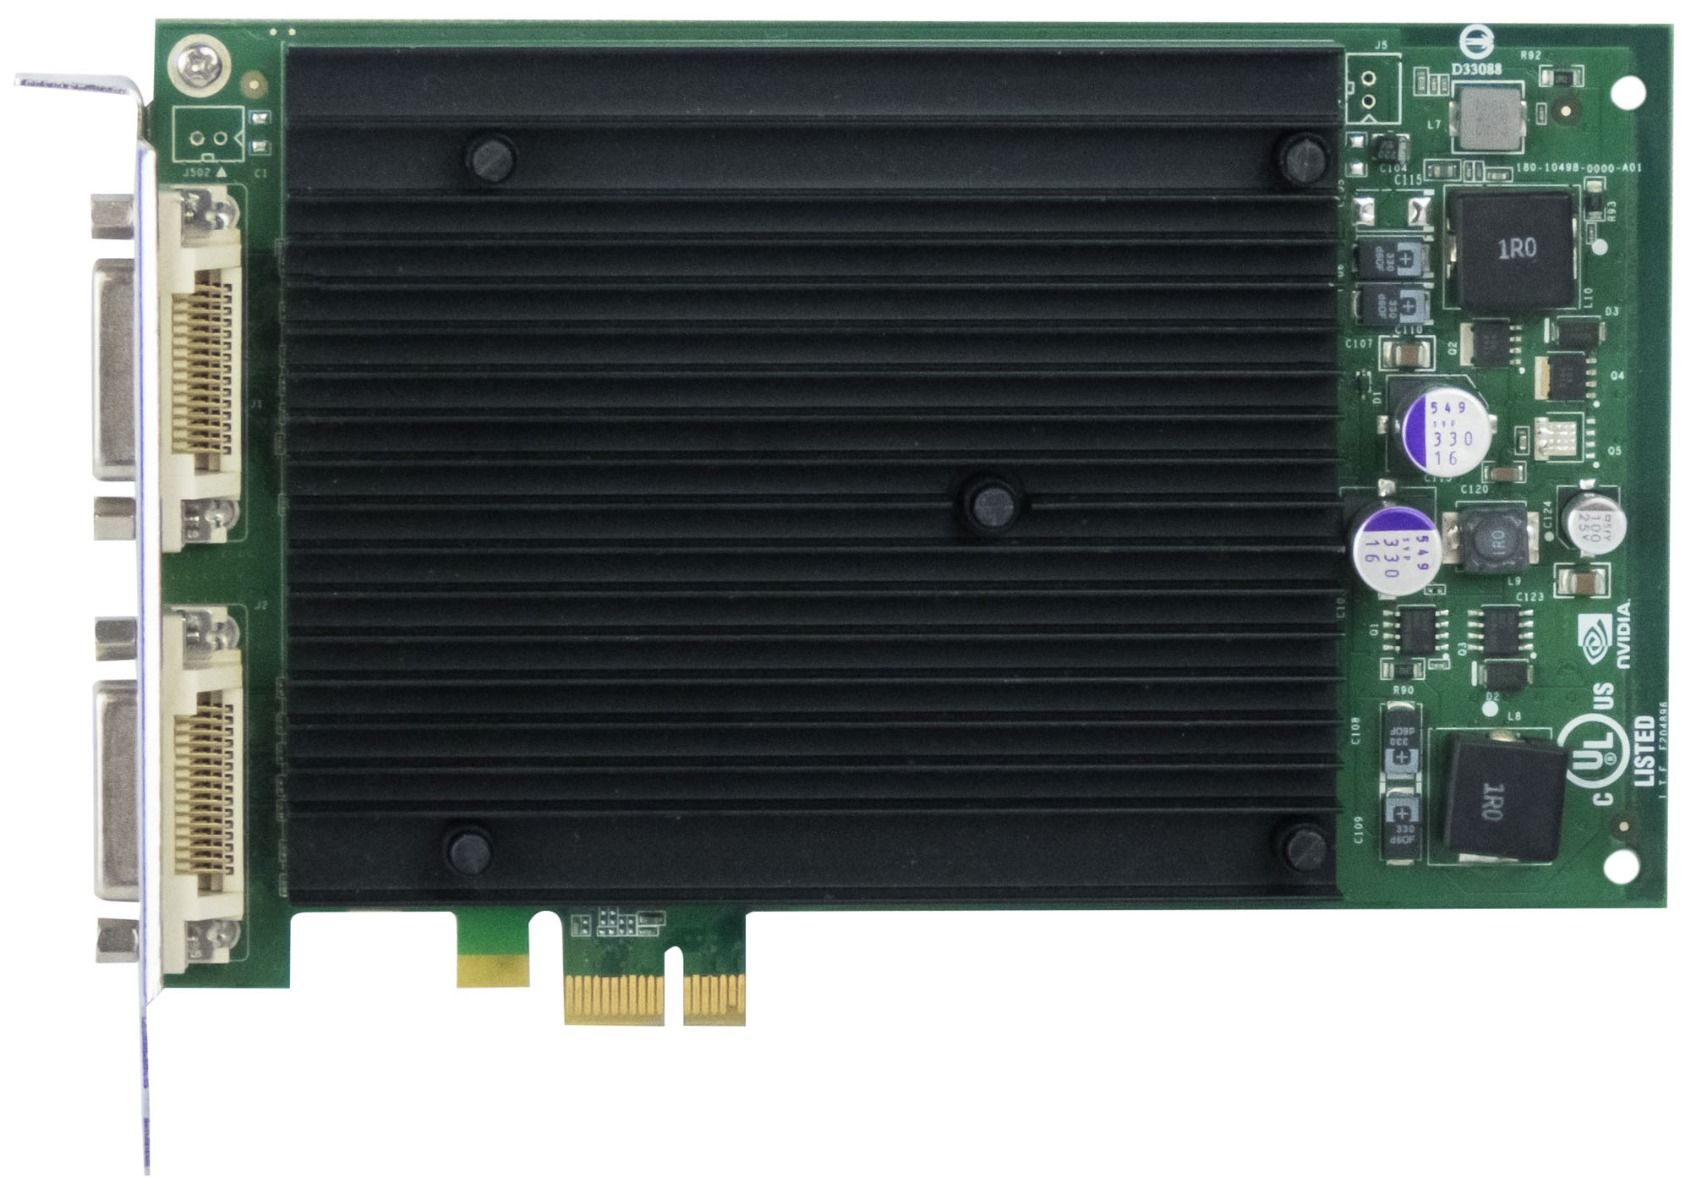 Nvidia QUADRO NVS 440 256MB PCIe x1 GDDR3 + CABLE